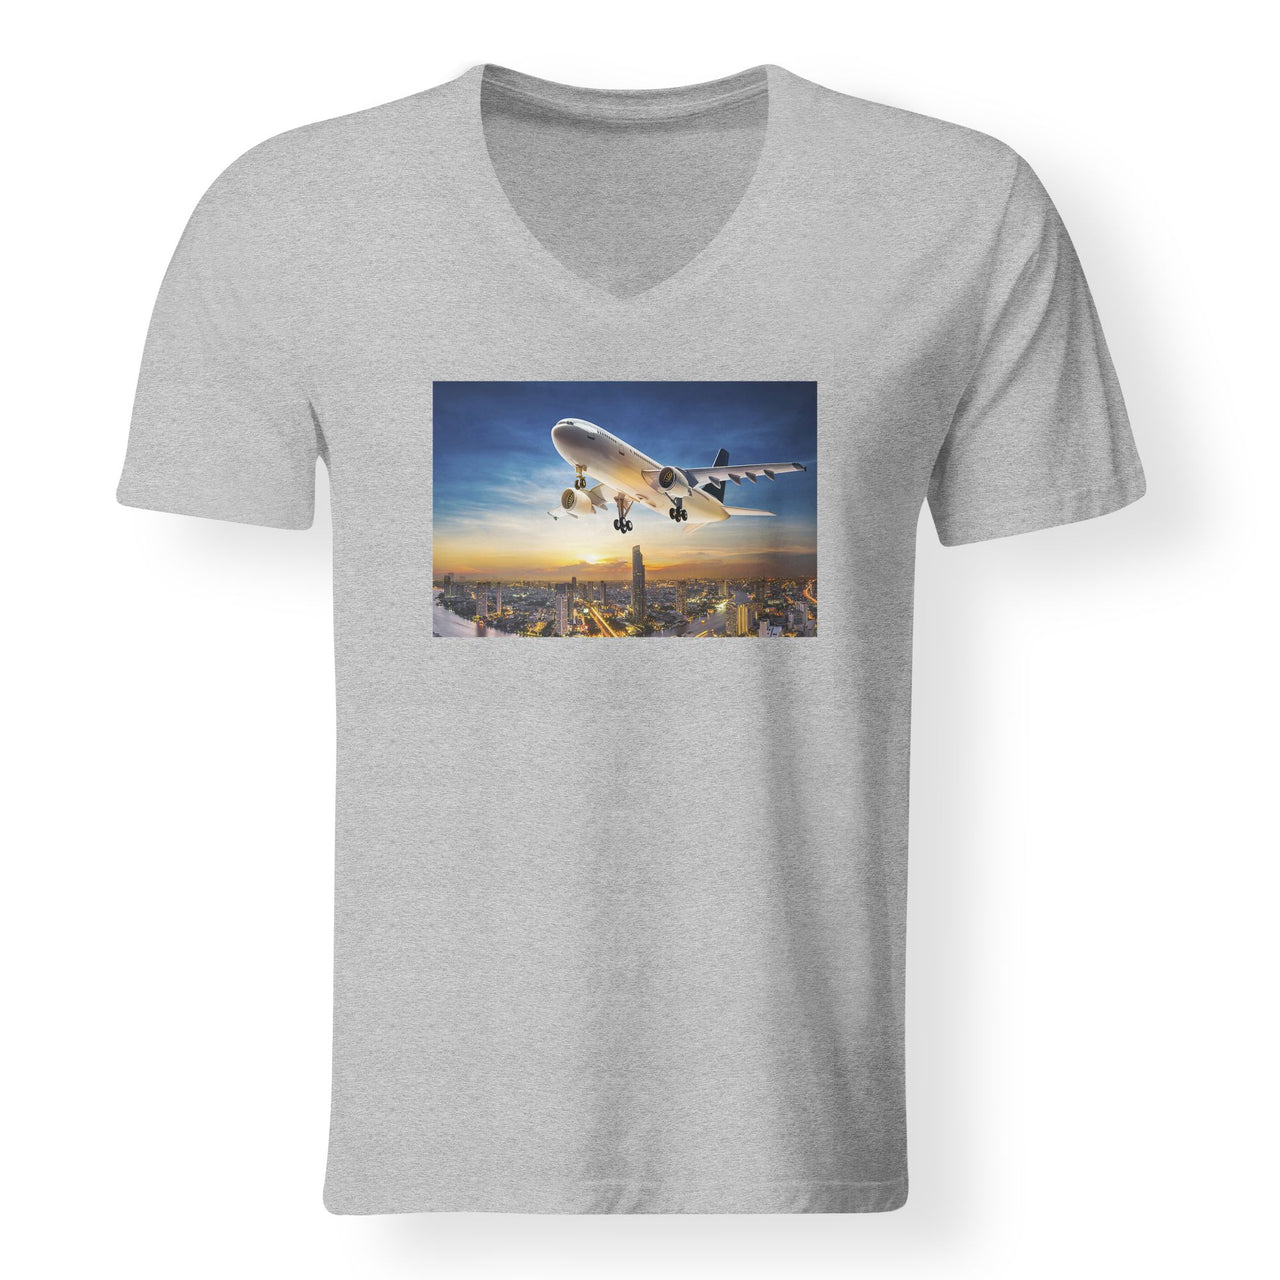 Super Aircraft over City at Sunset Designed V-Neck T-Shirts